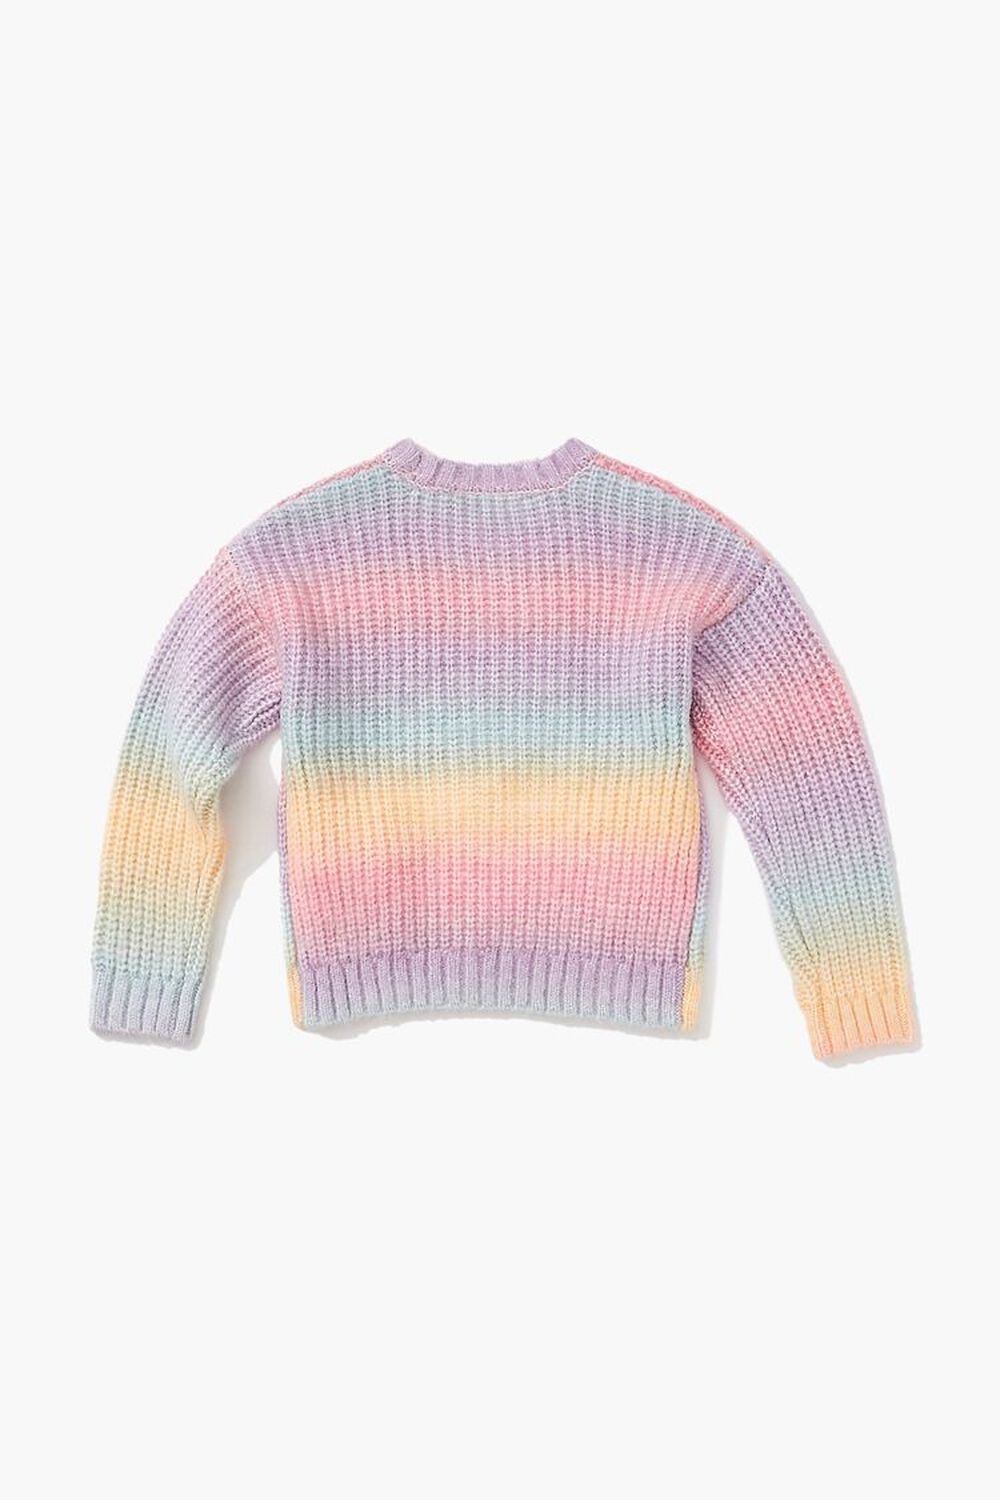 PURPLE/MULTI Girls Hello Kitty Rainbow Sweater (Kids), image 2